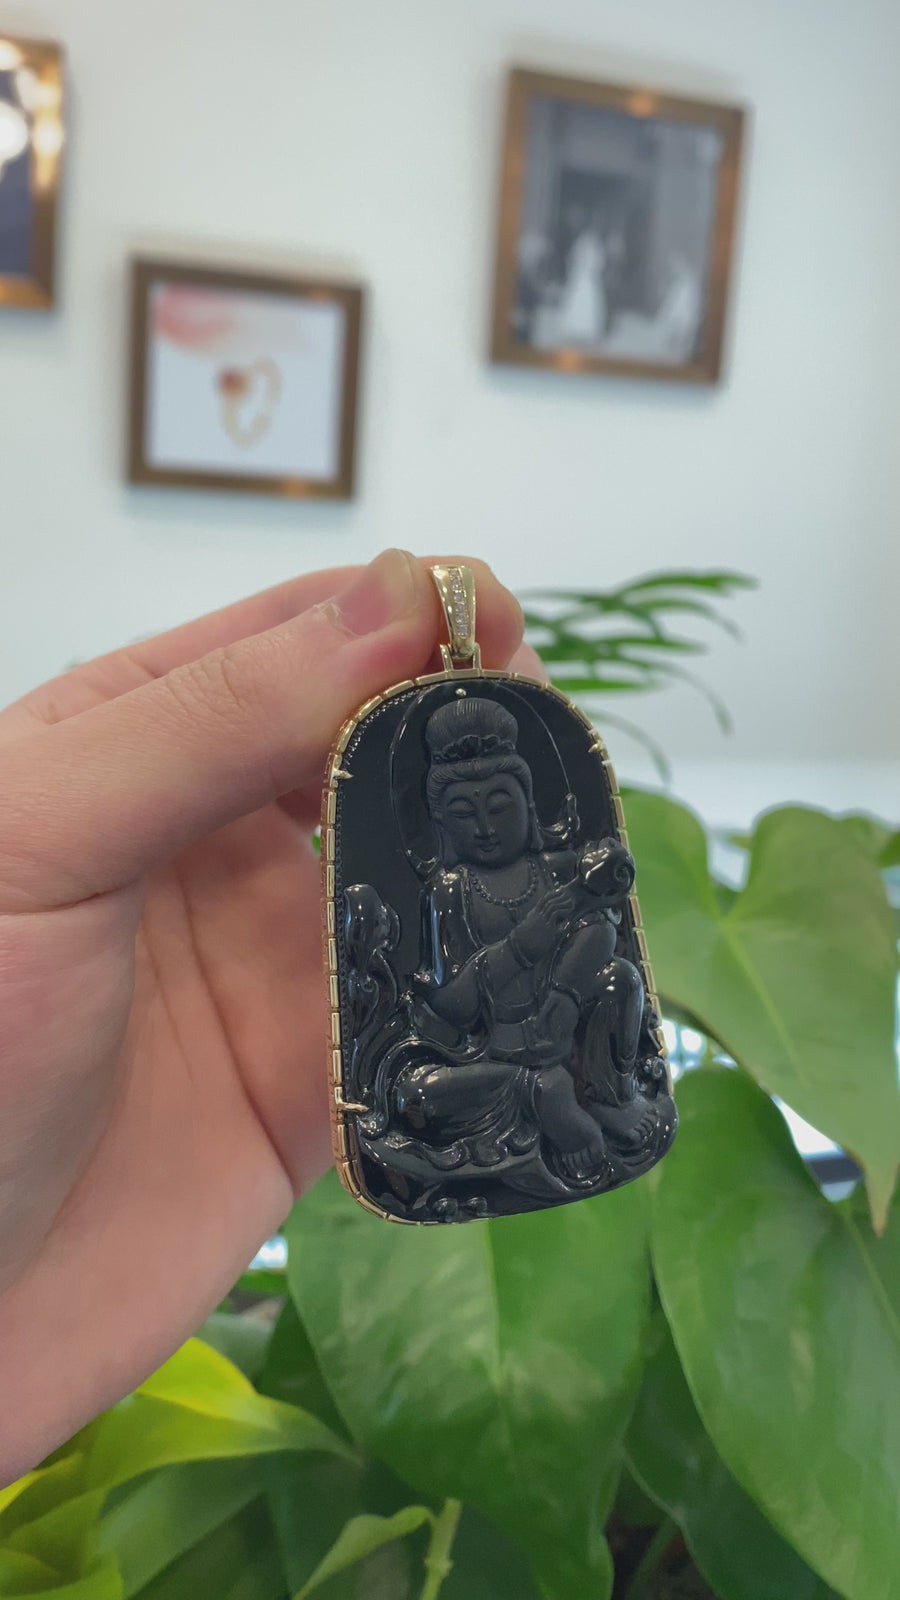 Baikalla 14k Yellow Gold "Goddess of Compassion" Genuine Black Burmese Jadeite Jade Guanyin Necklace With Gold Bail